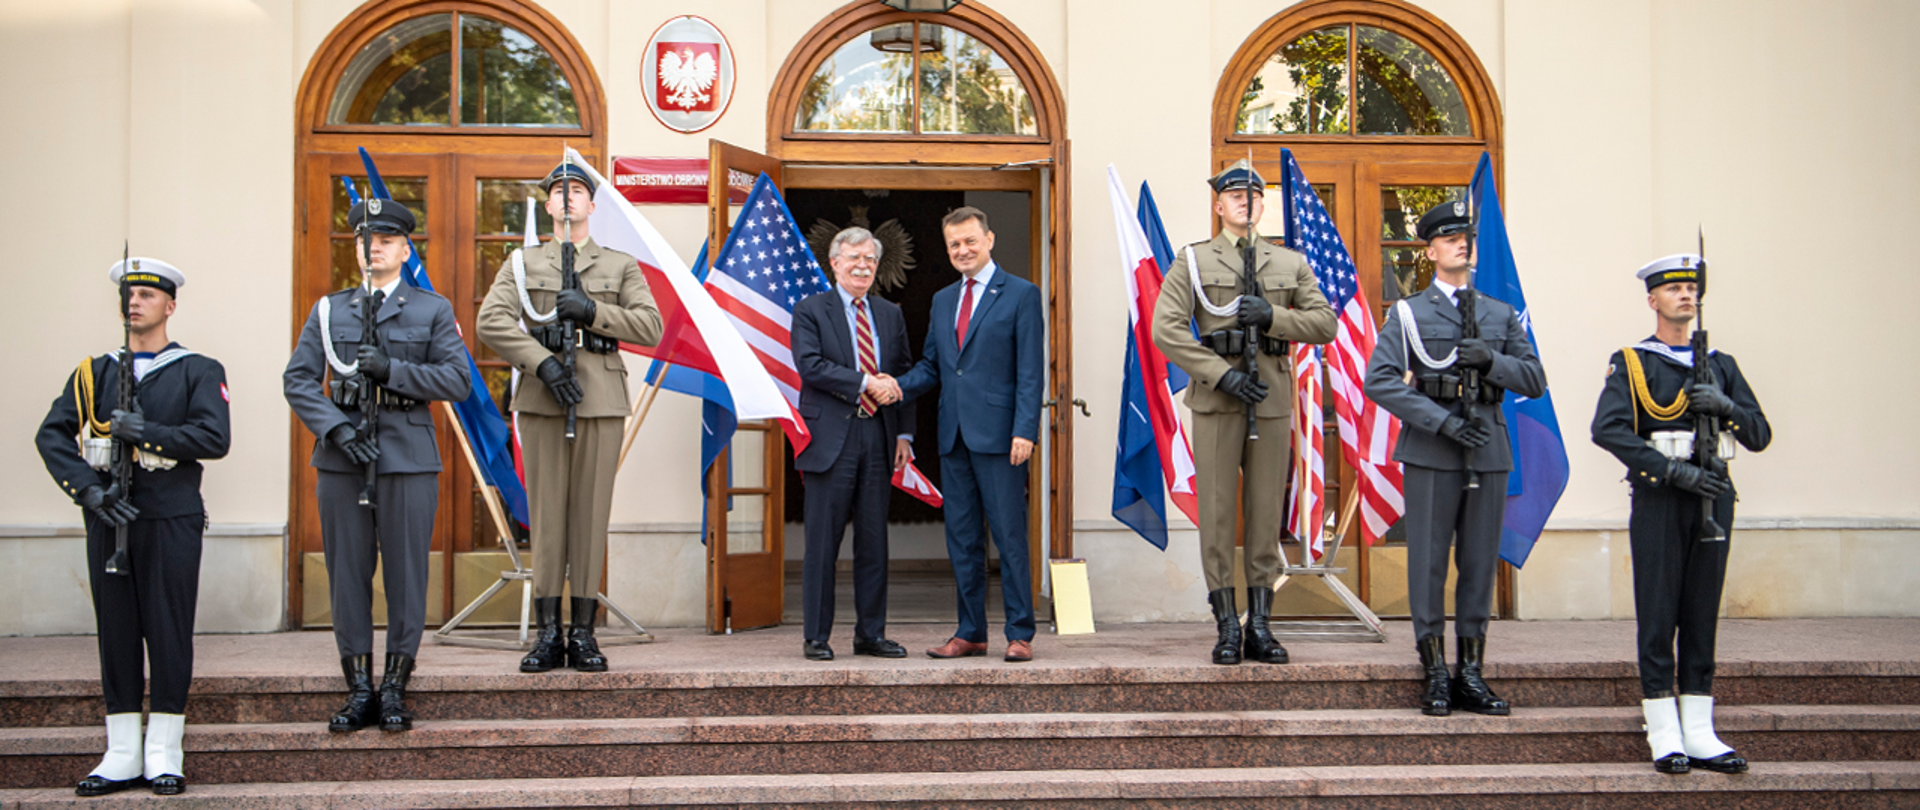 MinDef Blaszczak and Ambassador Bolton handshake